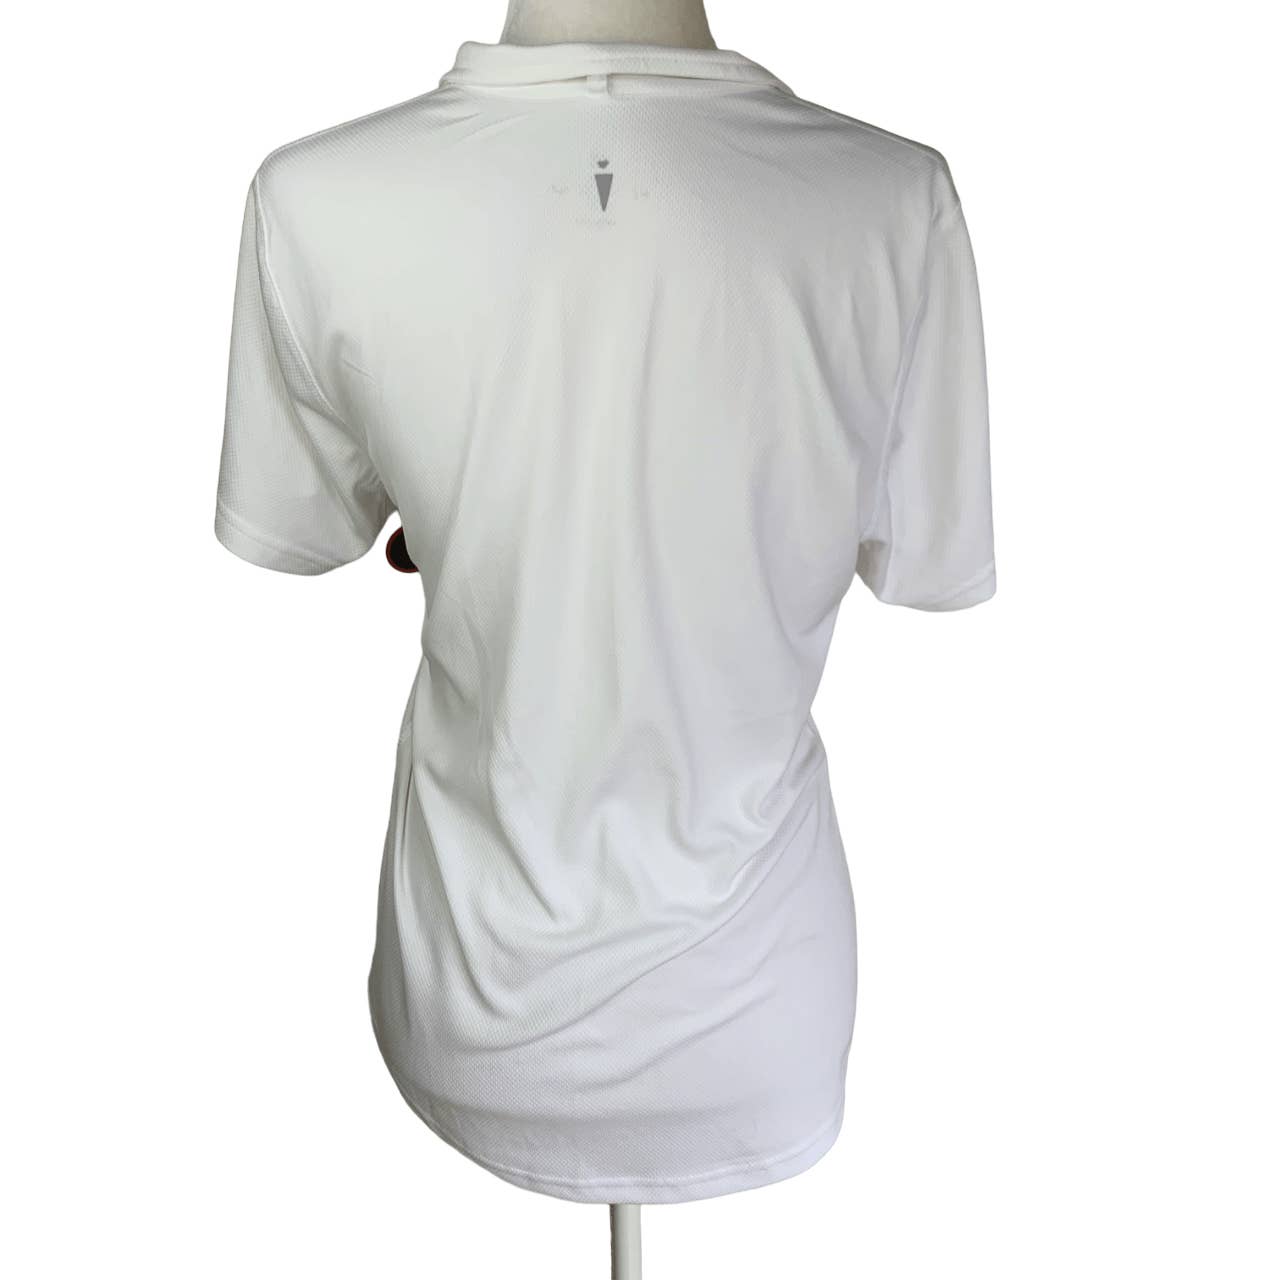 Kerrits 'Venti' IceFil Riding Shirt in White - Woman's 1X / XXL